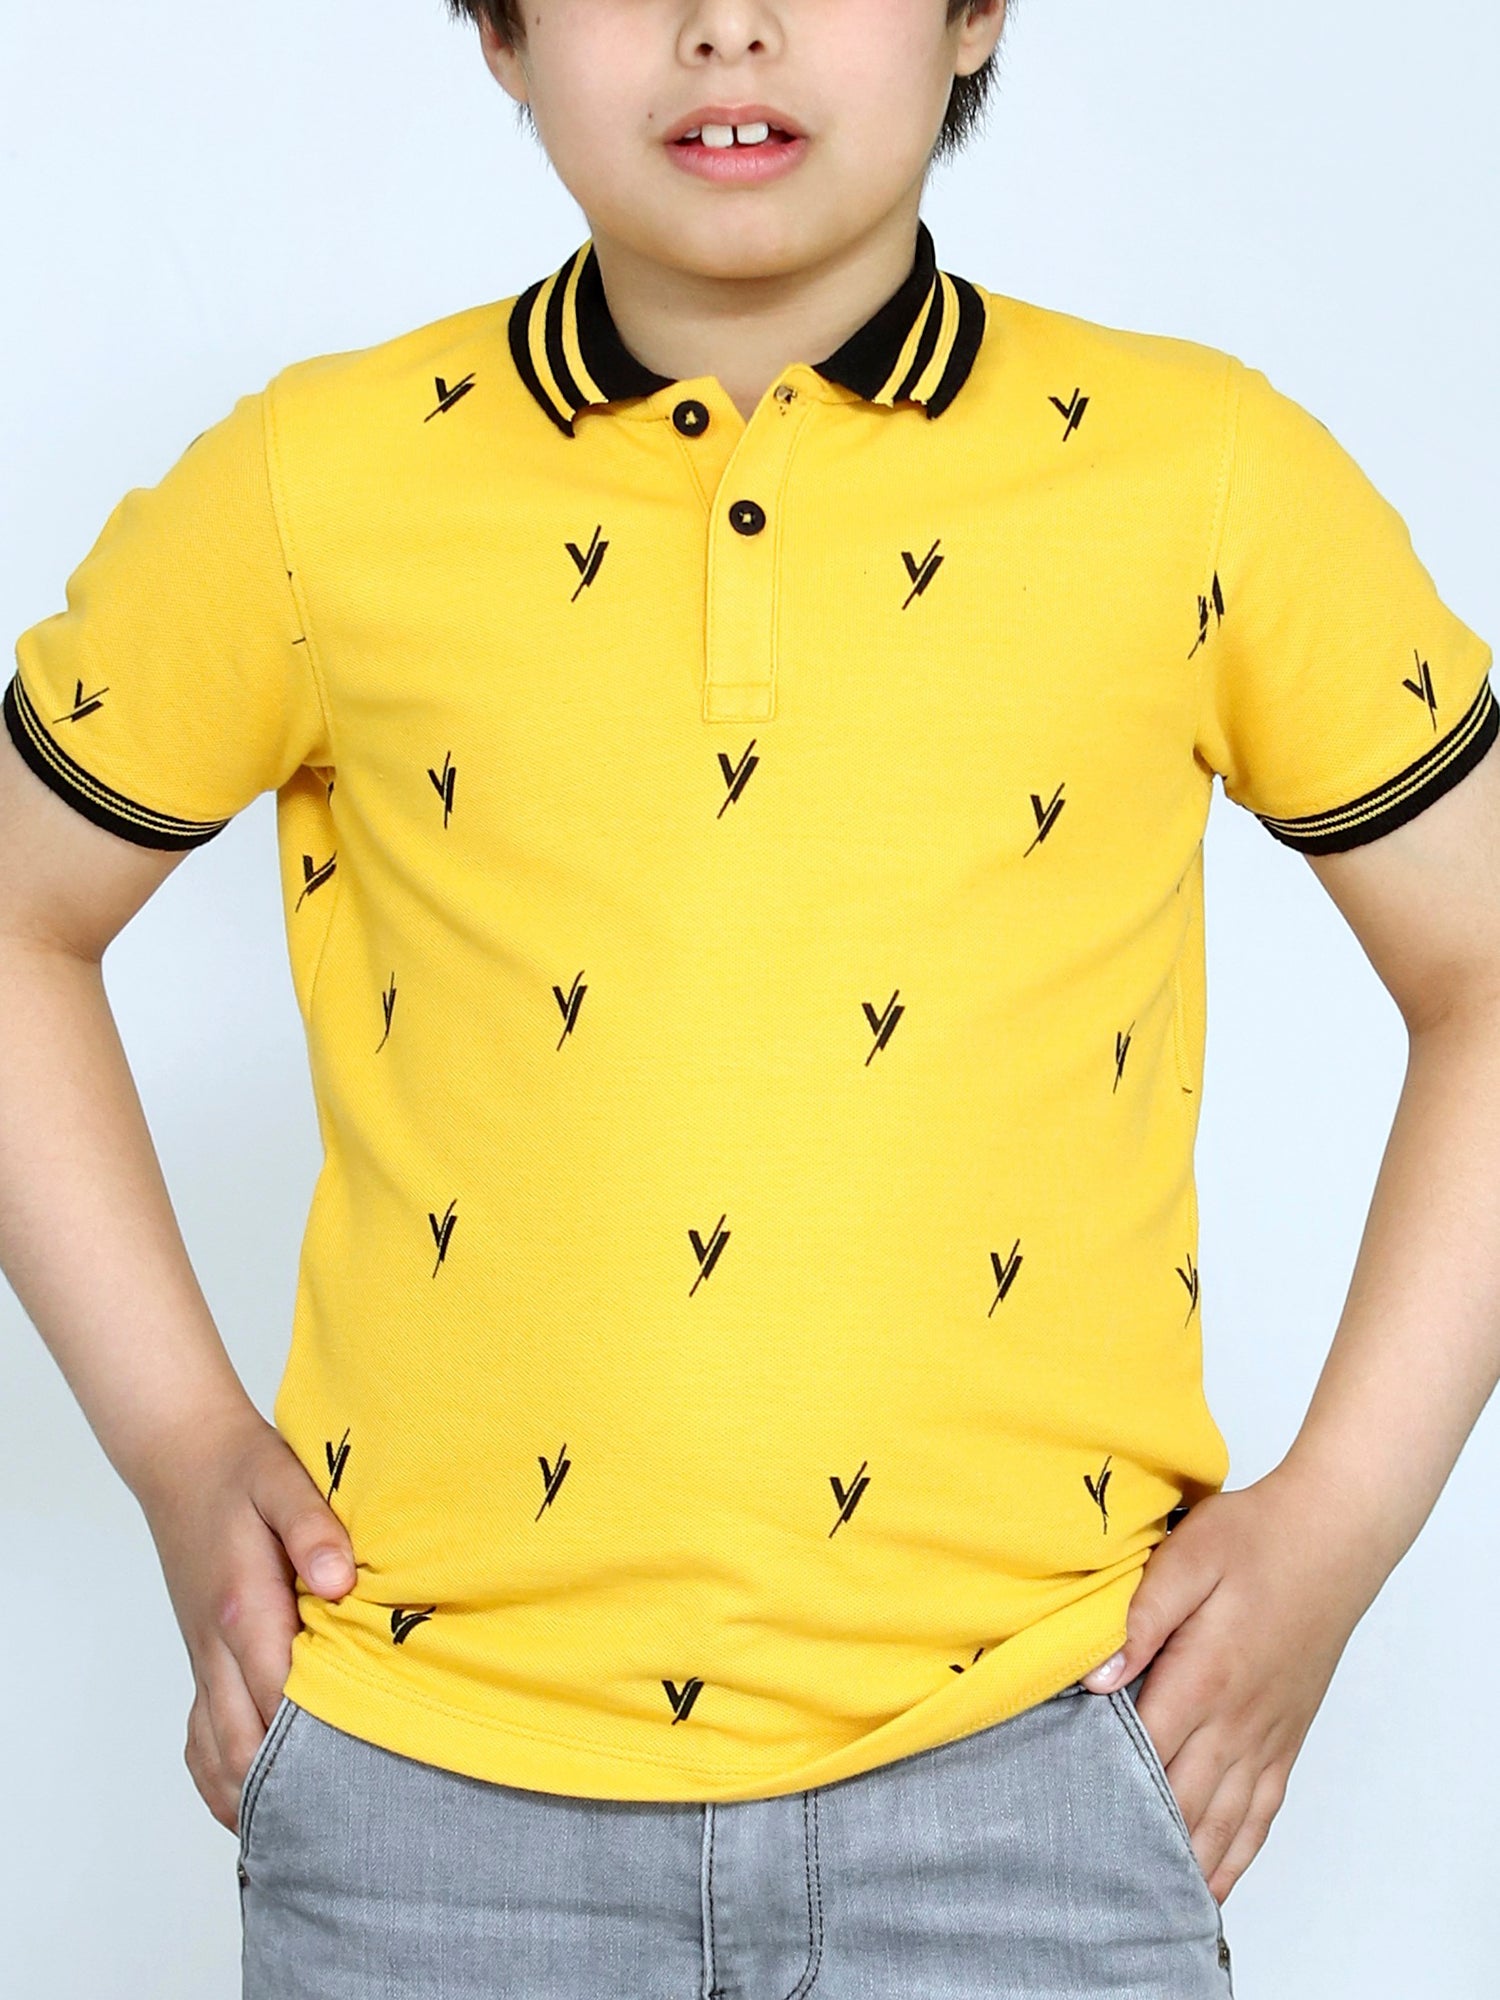 Boys Polo Shirt (Tipping Collar) By Velvour Art# VBP02-C - Velvour Shop